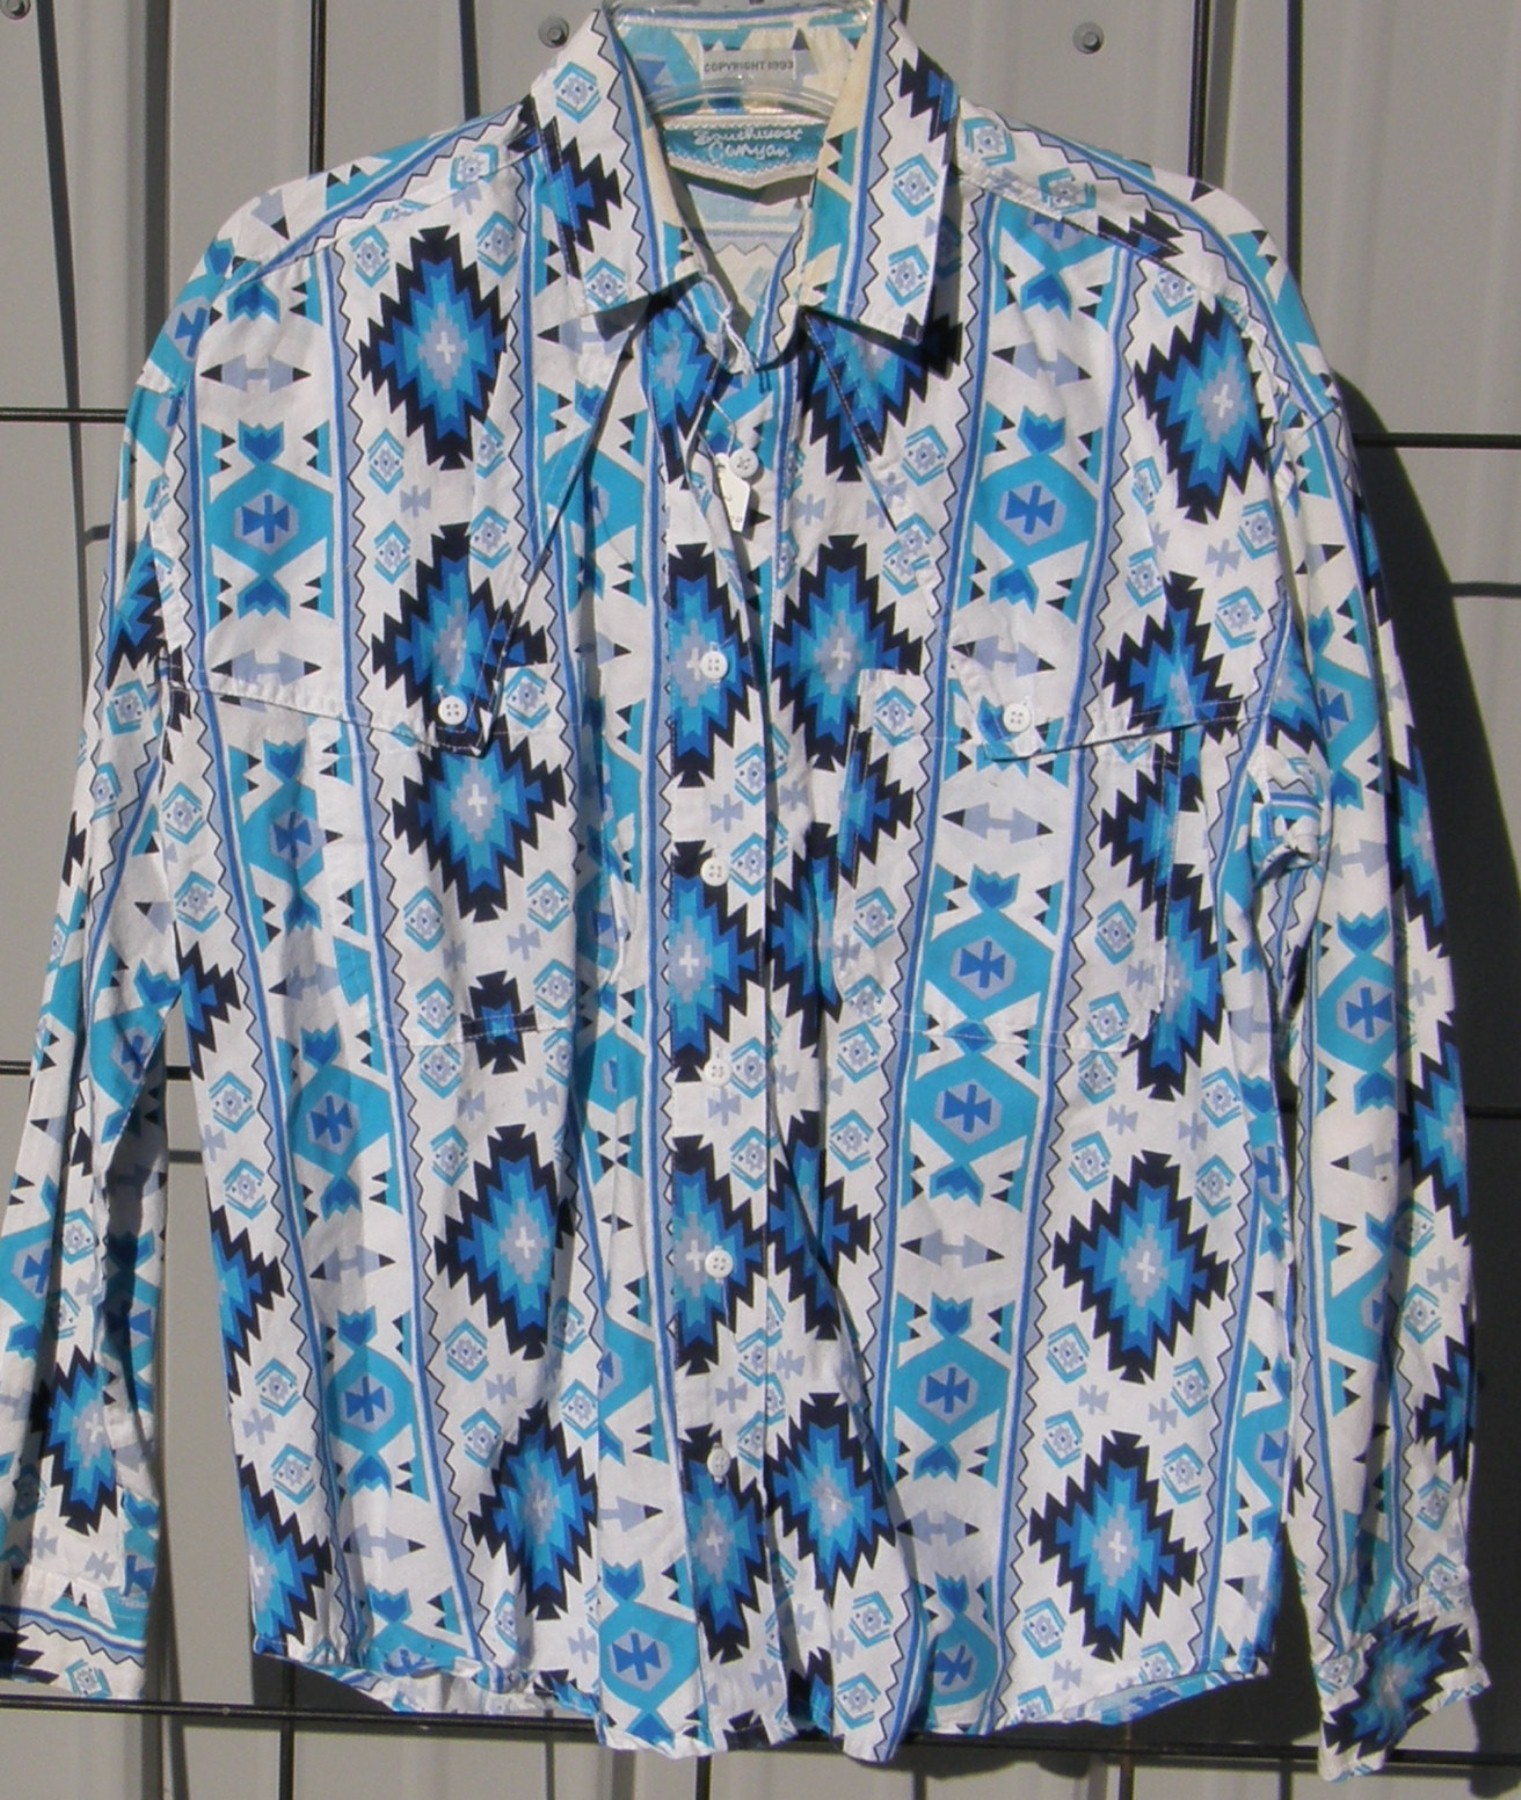 Vintage Southwest Canyon Southwestern Aztec Print Western Shirt Teal Blue/Black/White Ladies S